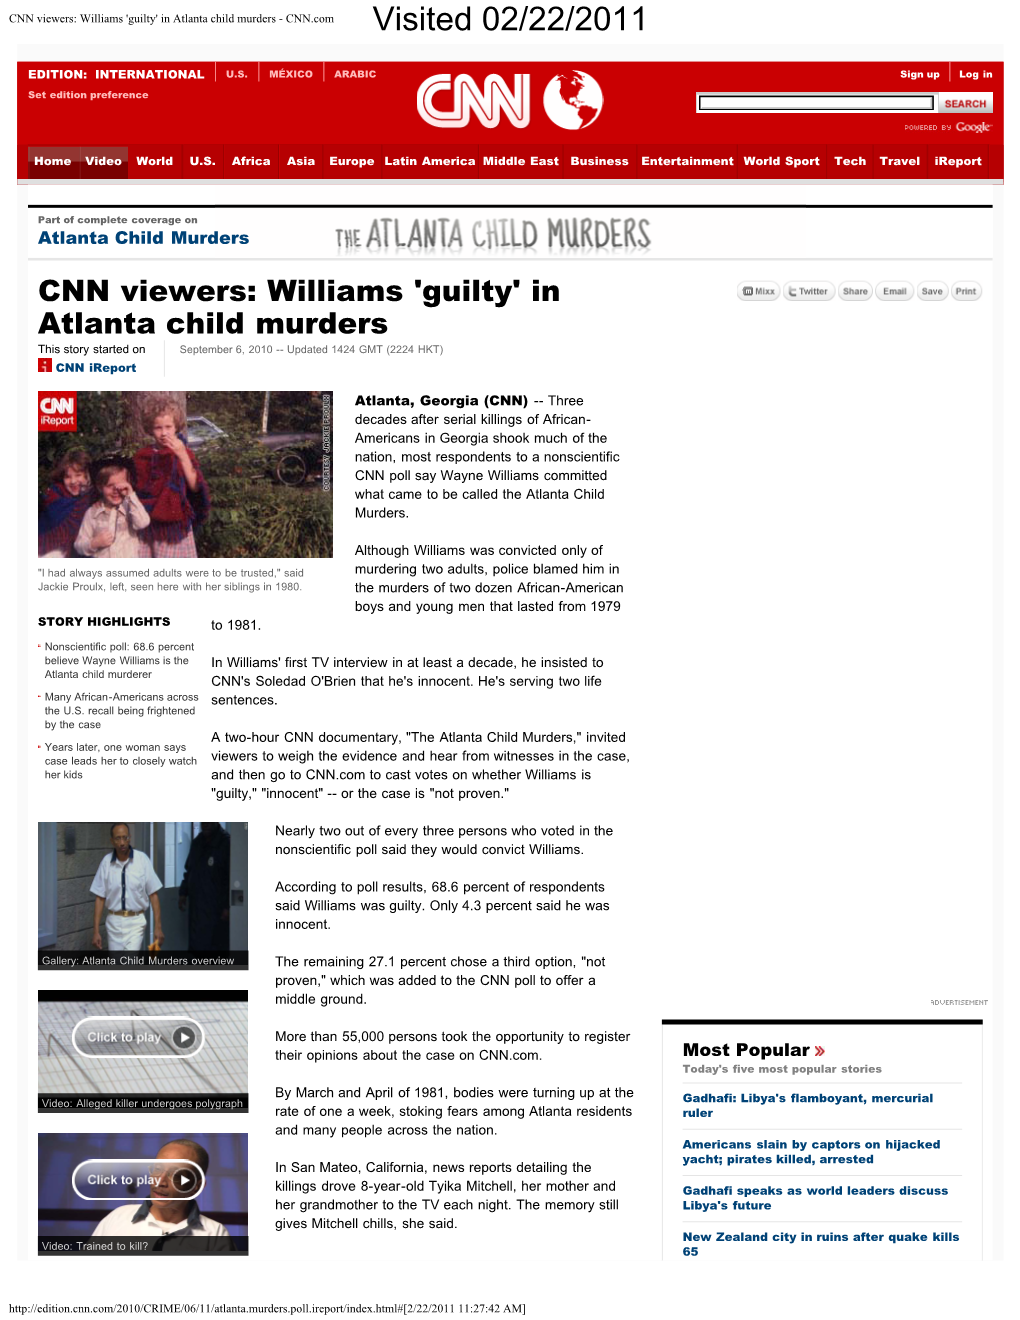 CNN Viewers: Williams 'Guilty' in Atlanta Child Murders - CNN.Com Visited 02/22/2011